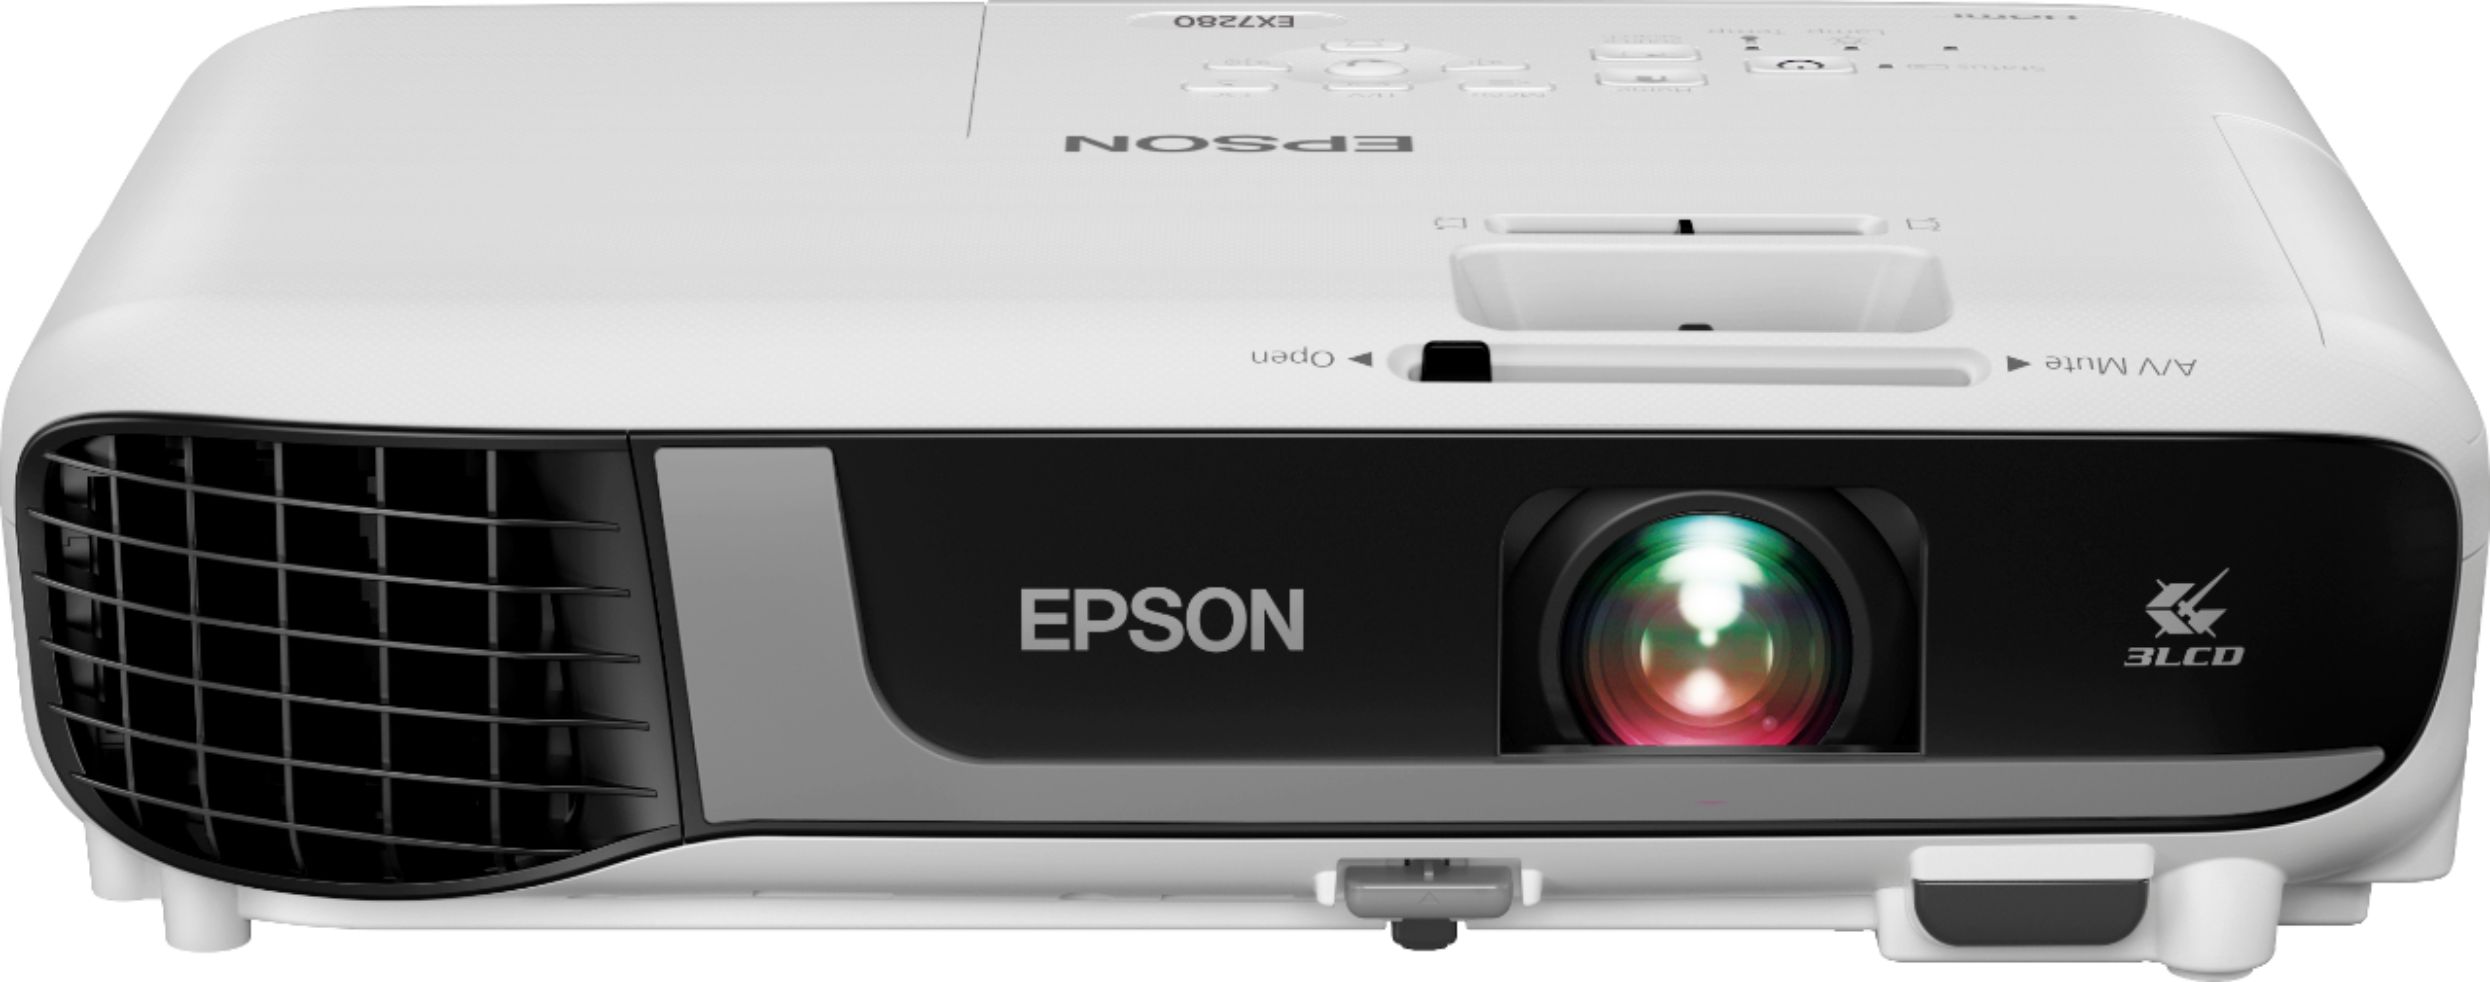 Epson Pro Ex7280 3lcd Wxga Projector, How To Mirror Ipad Epson Projector